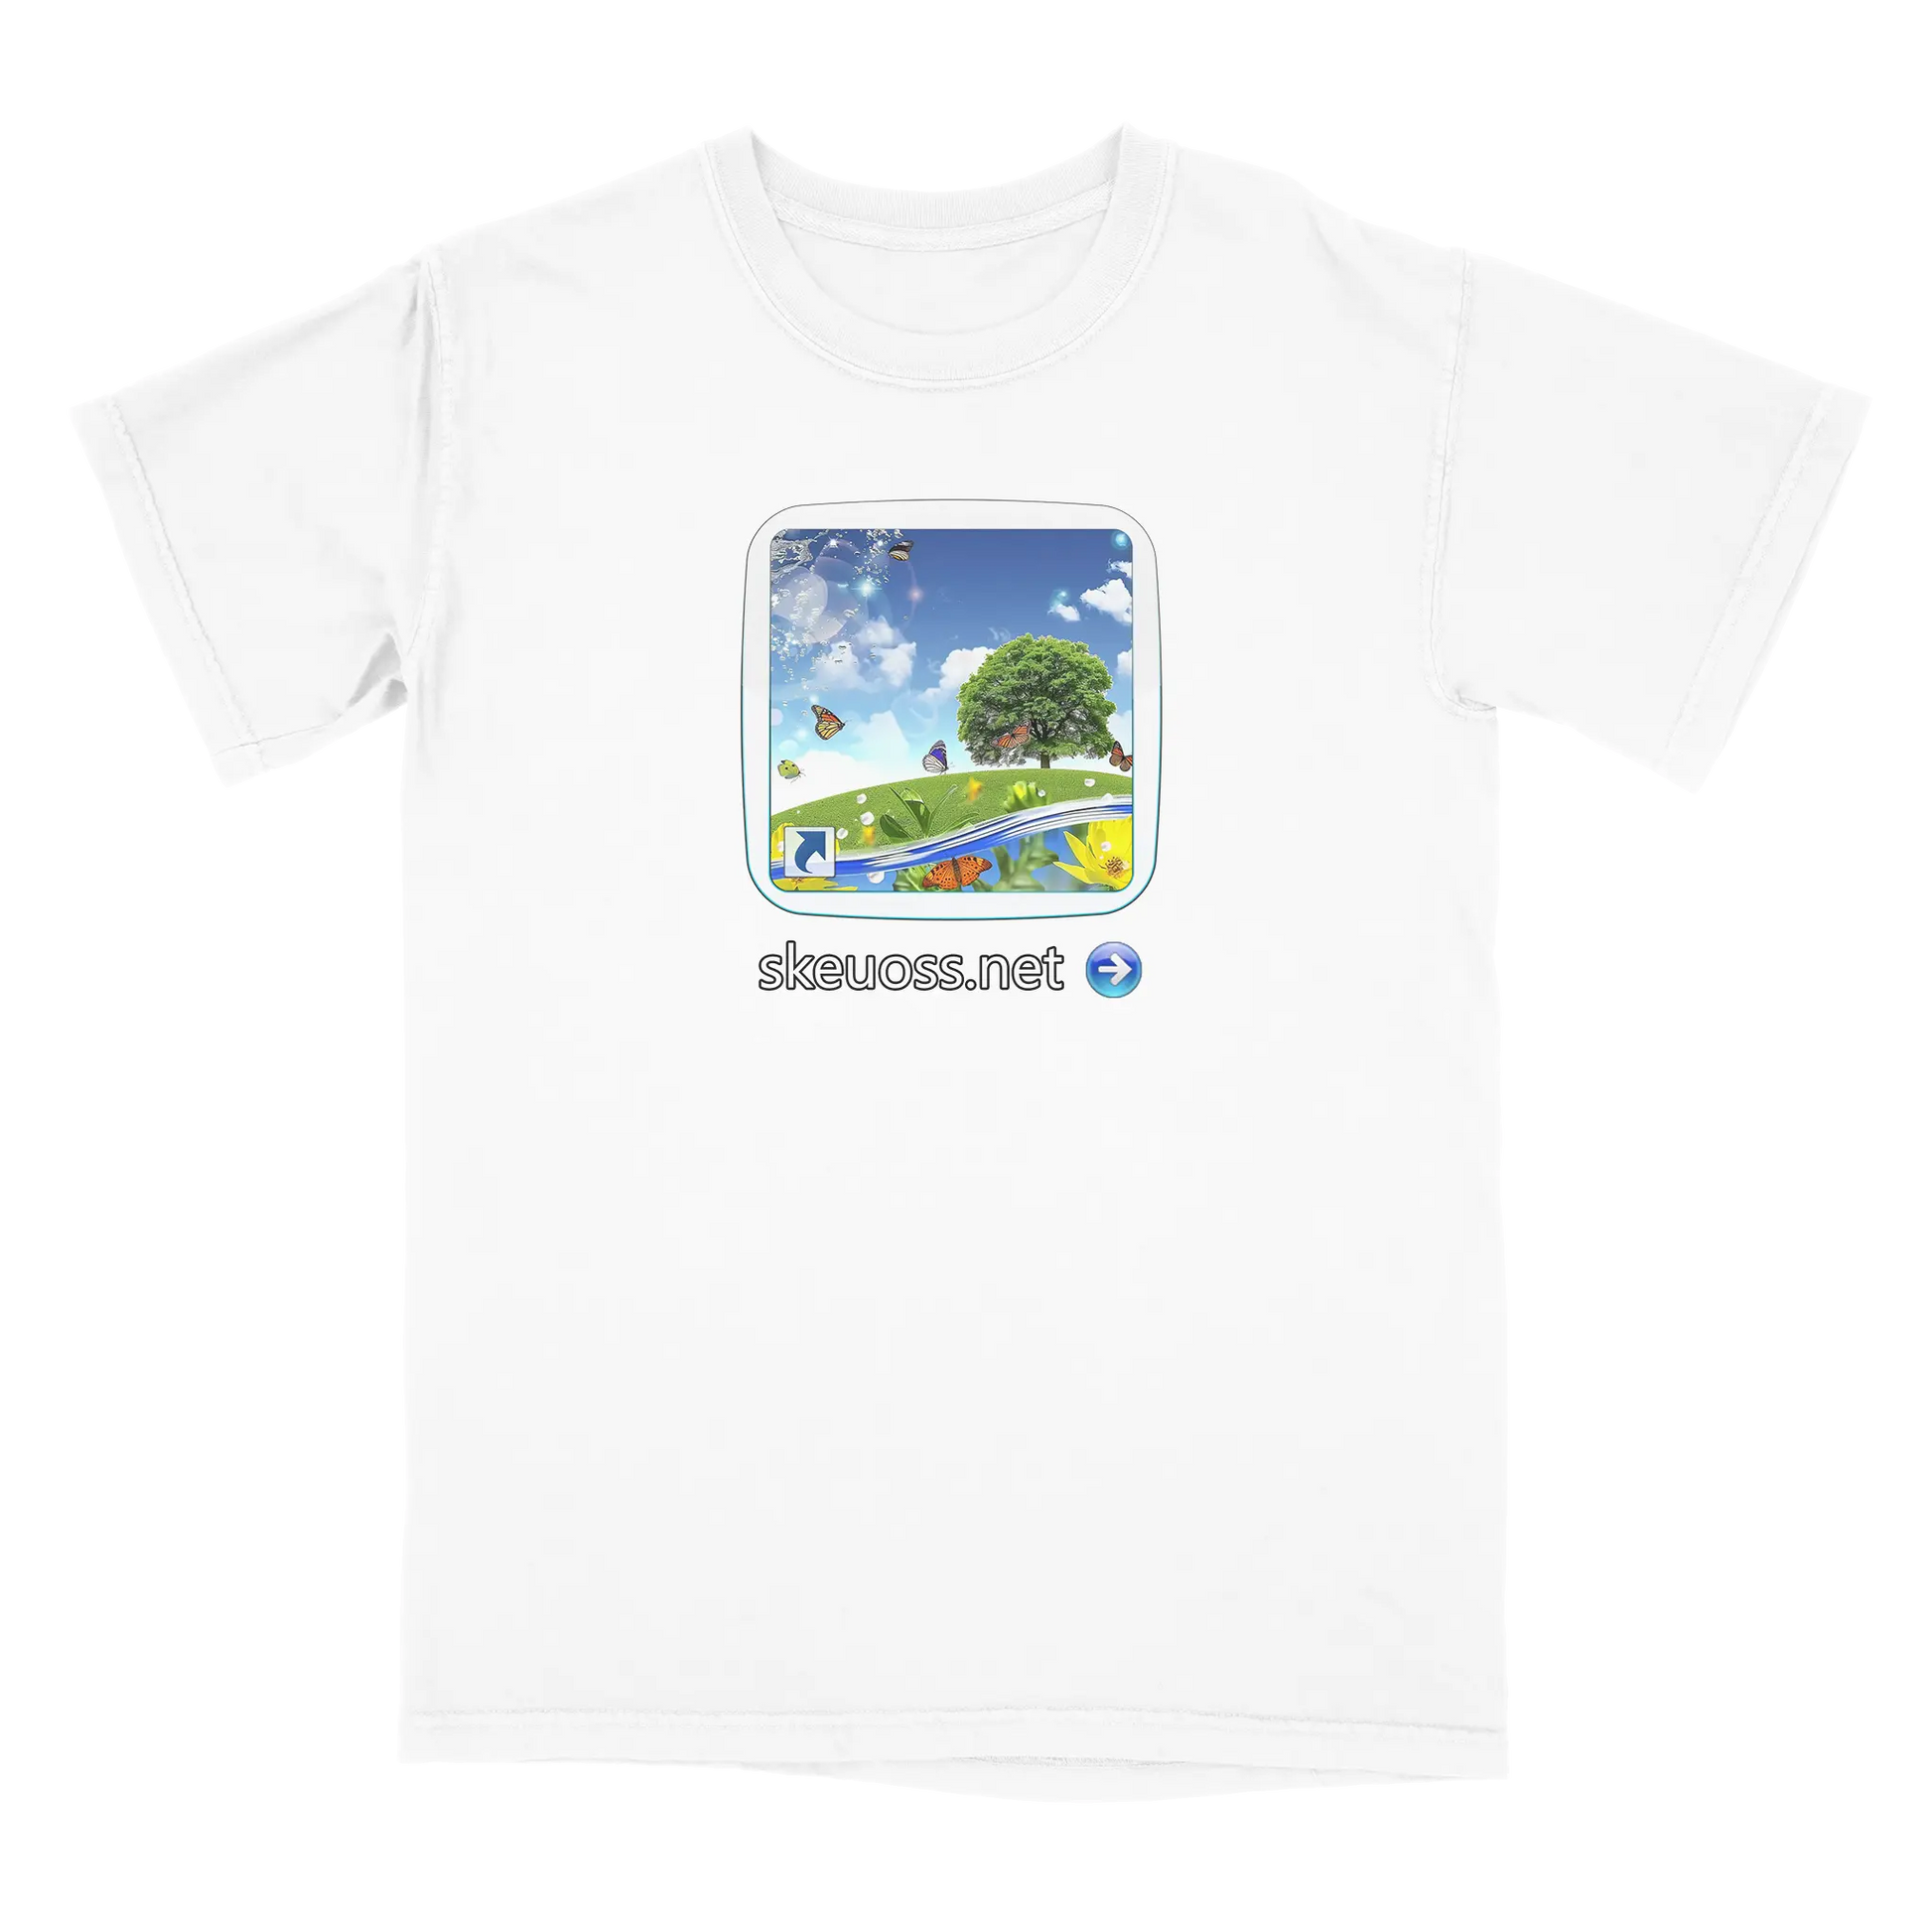 Frutiger Aero T-shirt - User Login Collection - User 388